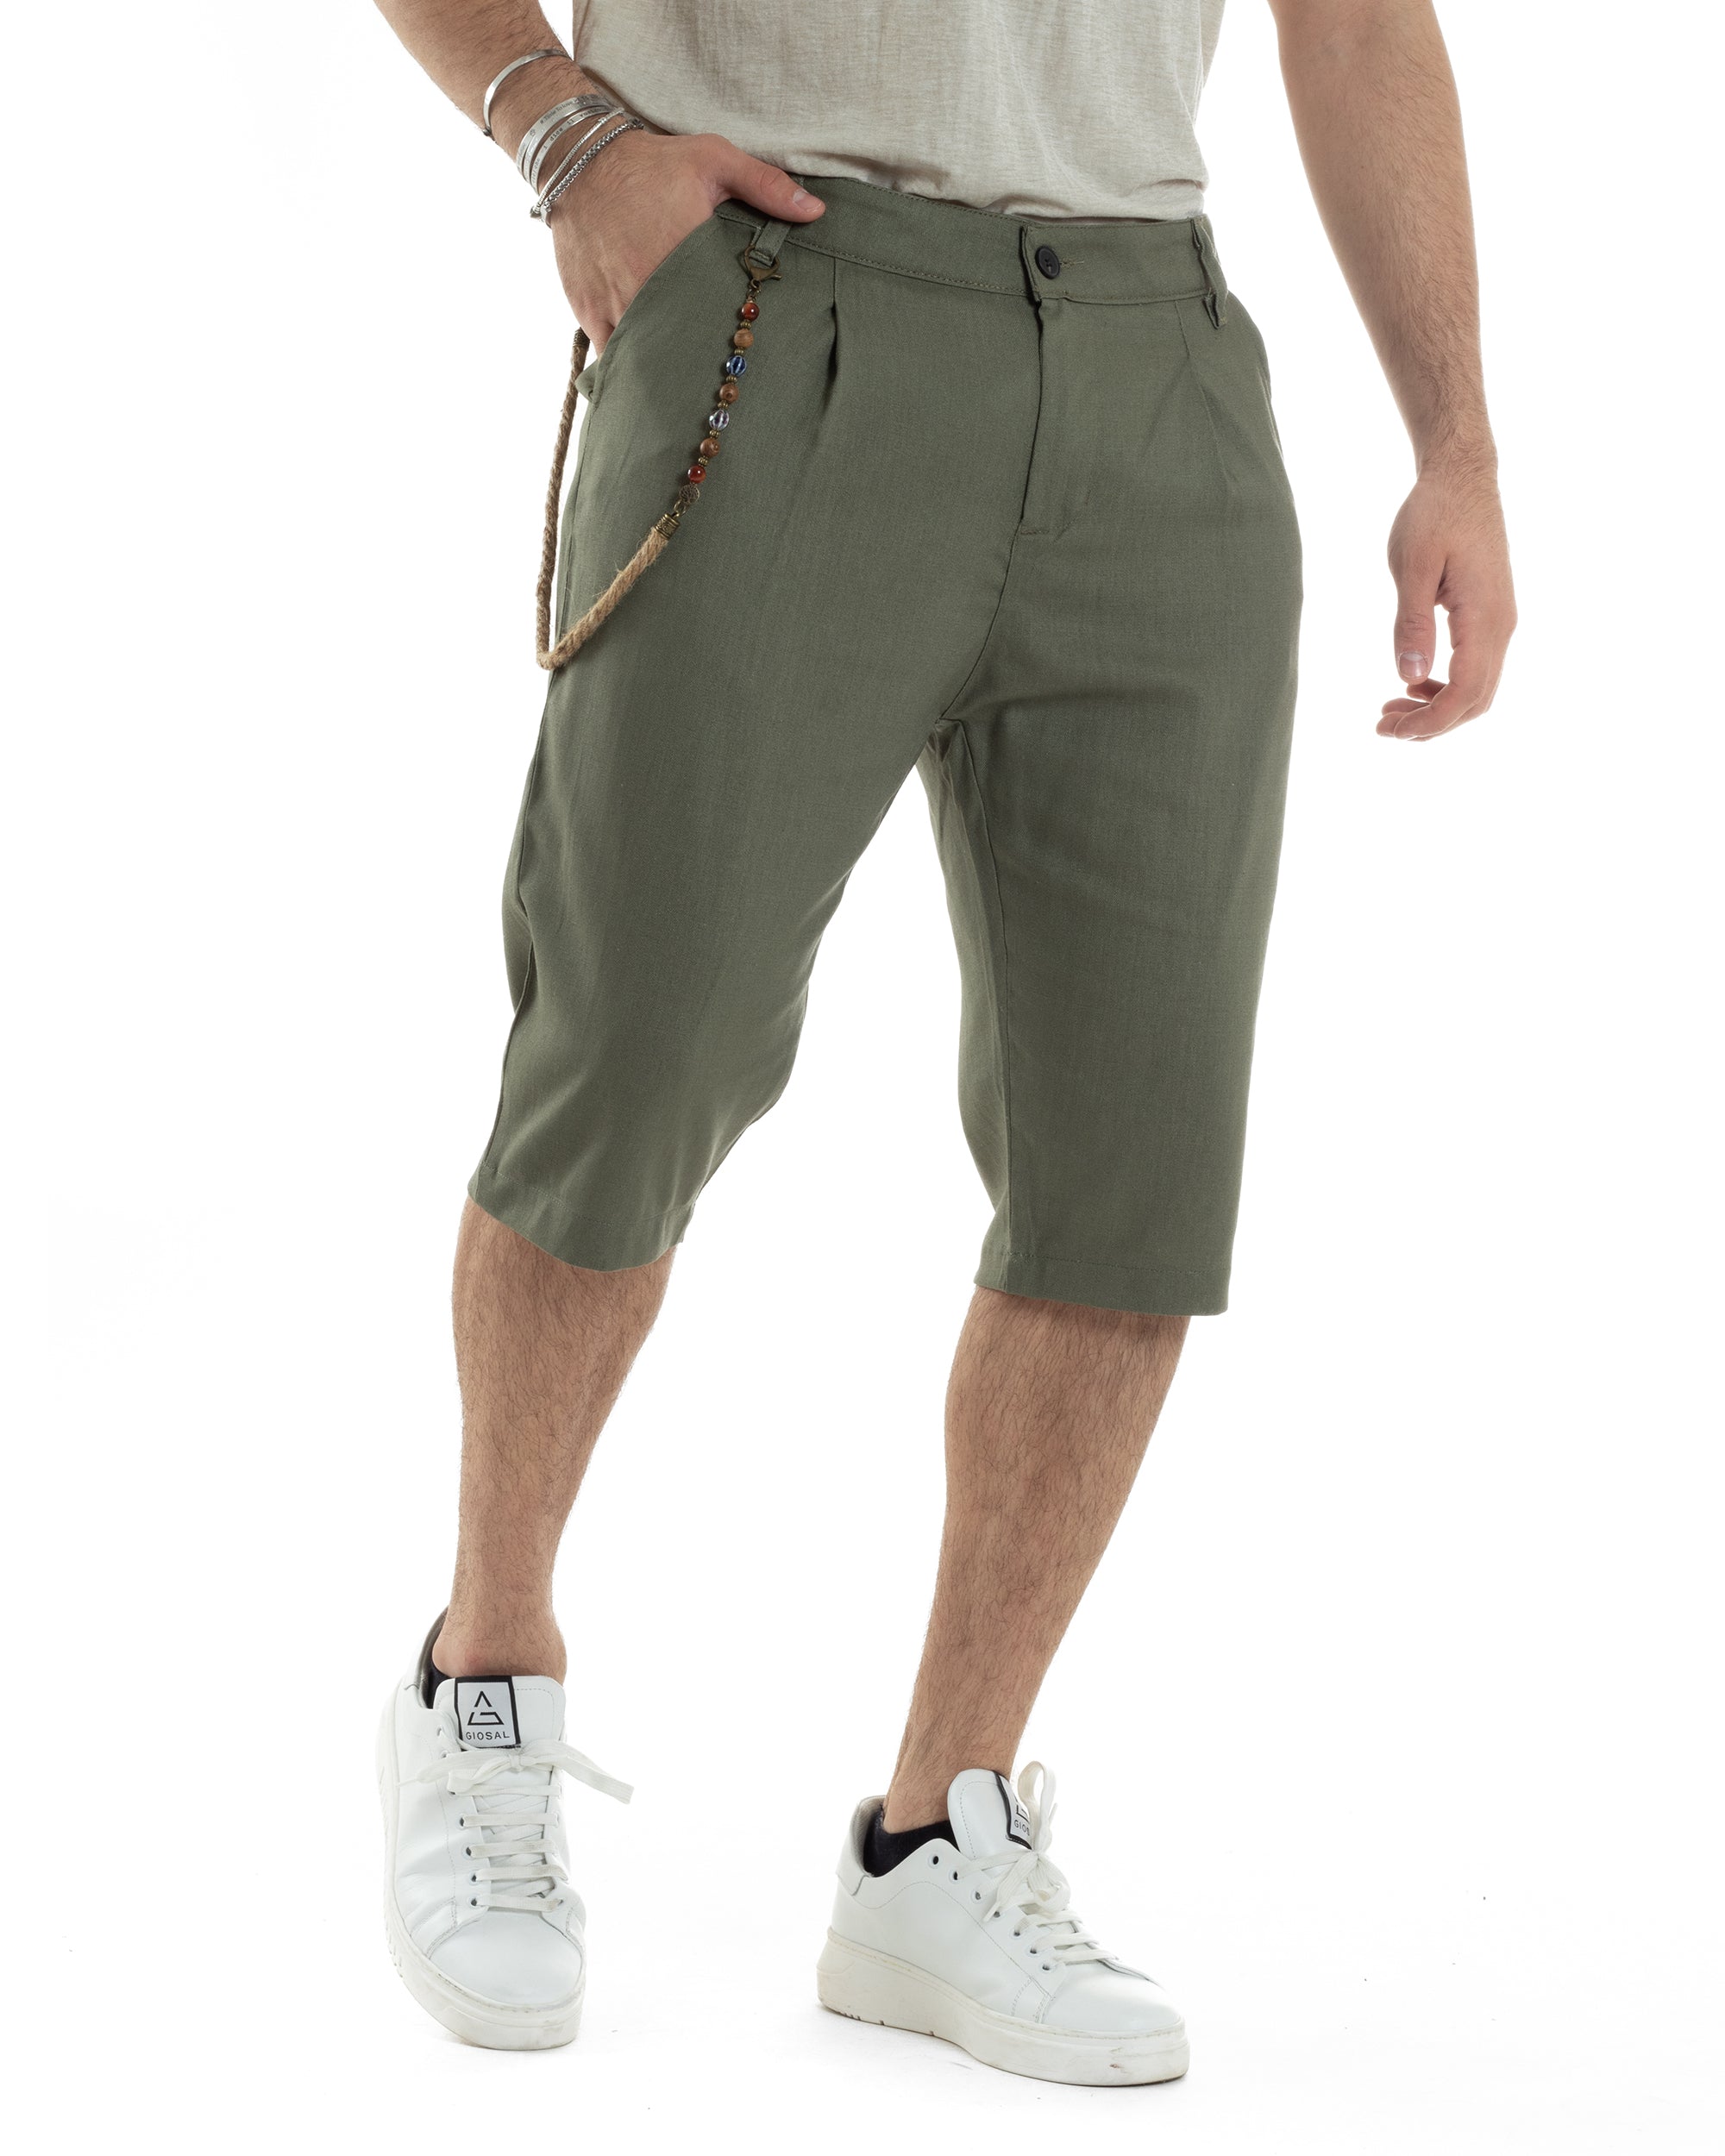 Bermuda Pantaloncino Uomo Corto Lino Tasca America Classico Sartoriale Comodo Casual Tinta Unita Verde GIOSAL-PC1953A